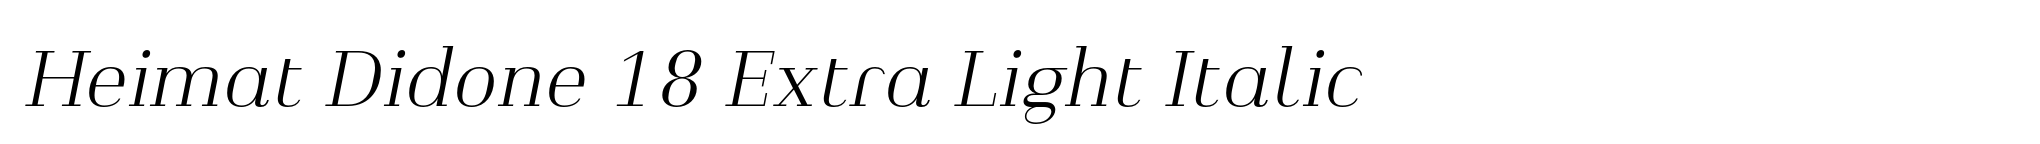 Heimat Didone 18 Extra Light Italic image